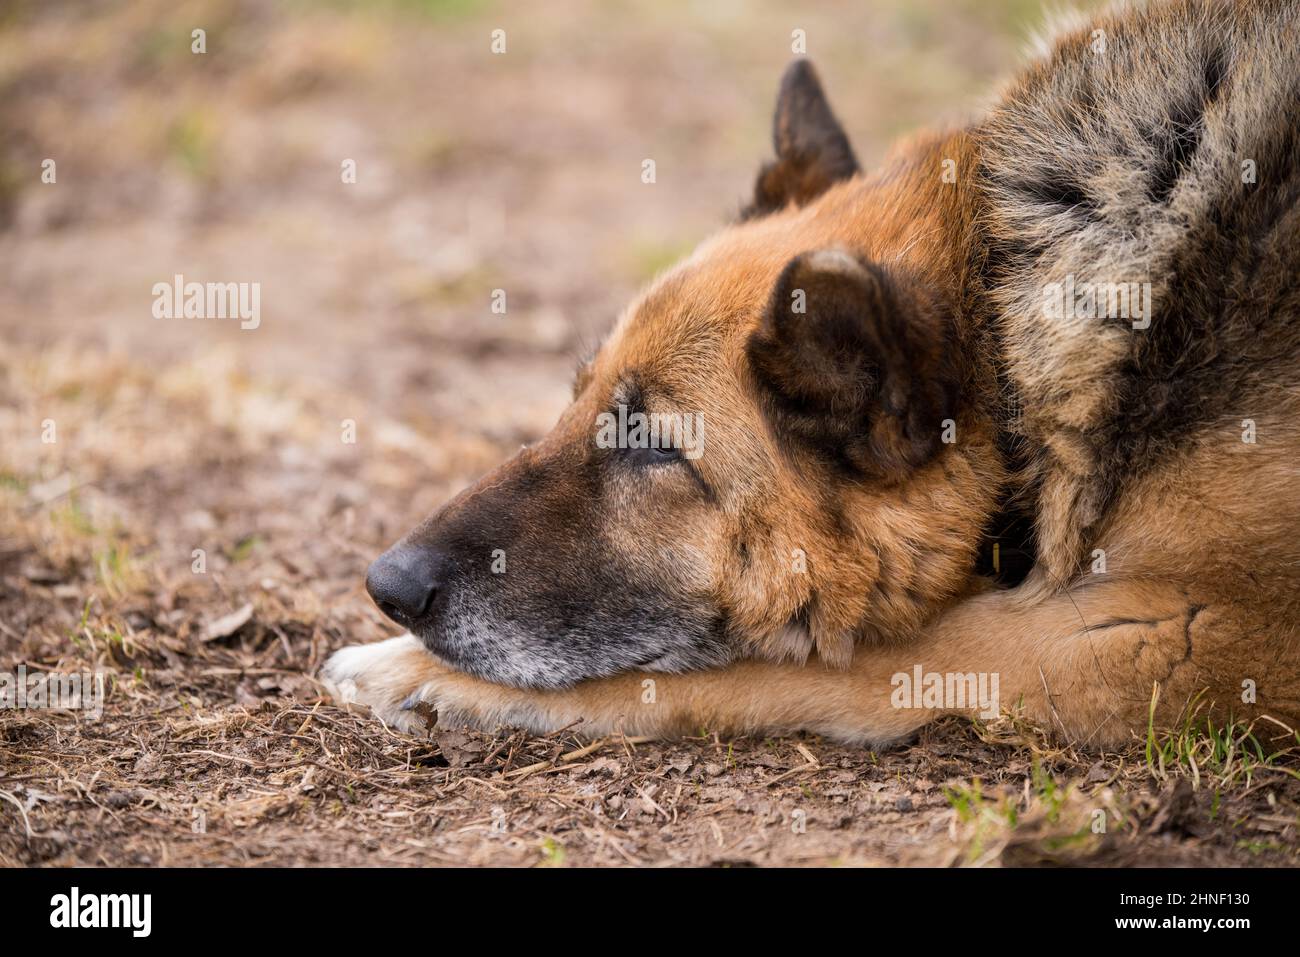 German shepherd dog sleeping hi-res stock photography and images - Alamy